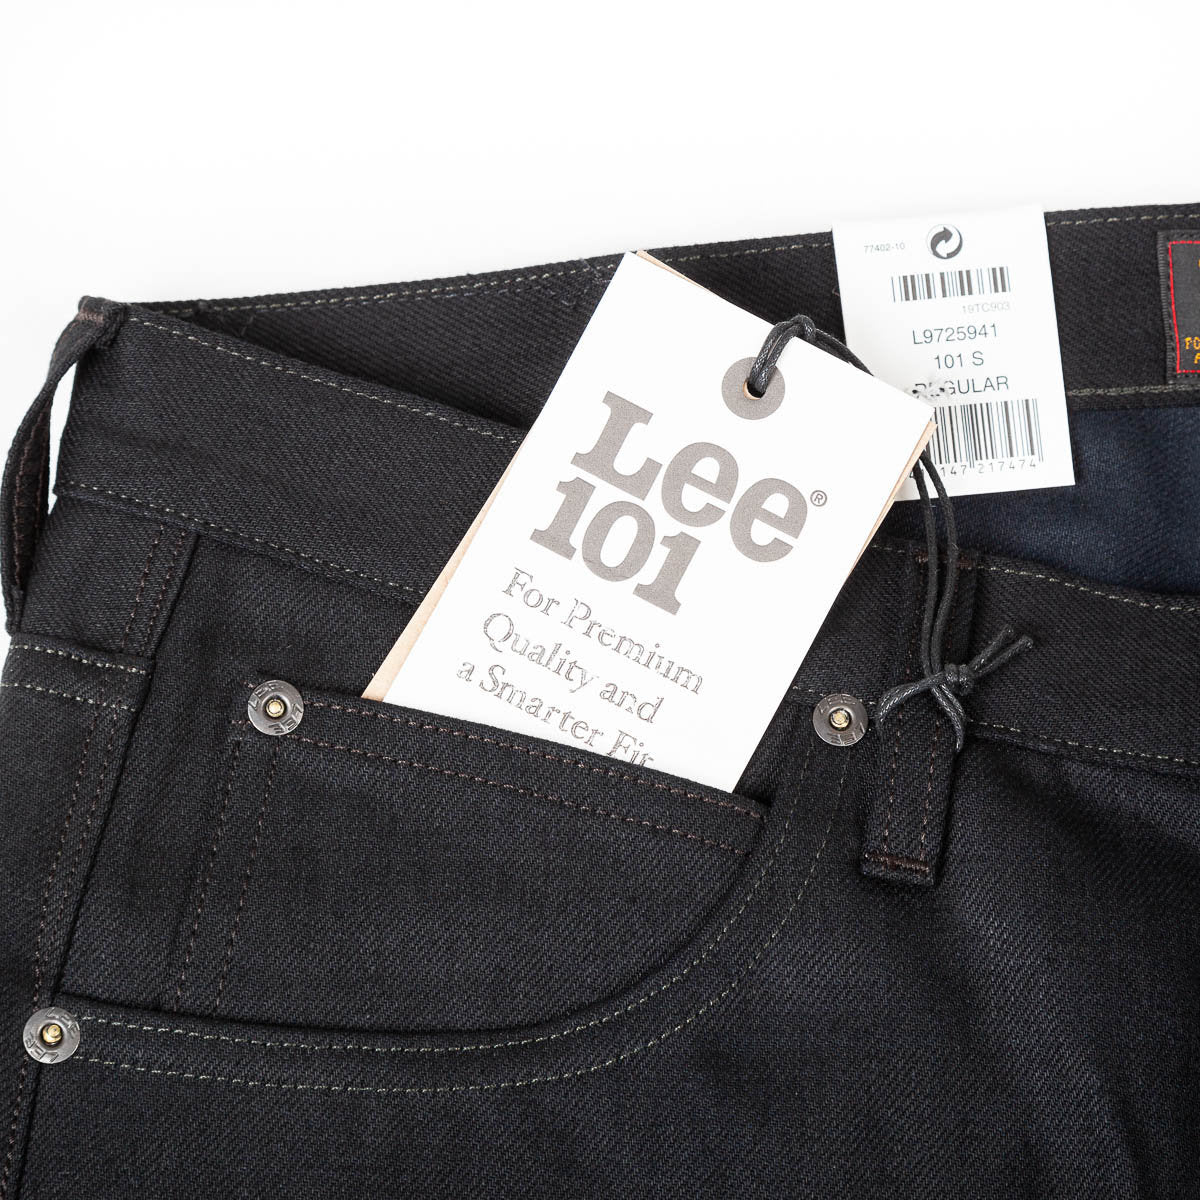 Men's Lee 101 S Regular Fit Button Fly Jean in Dry Black